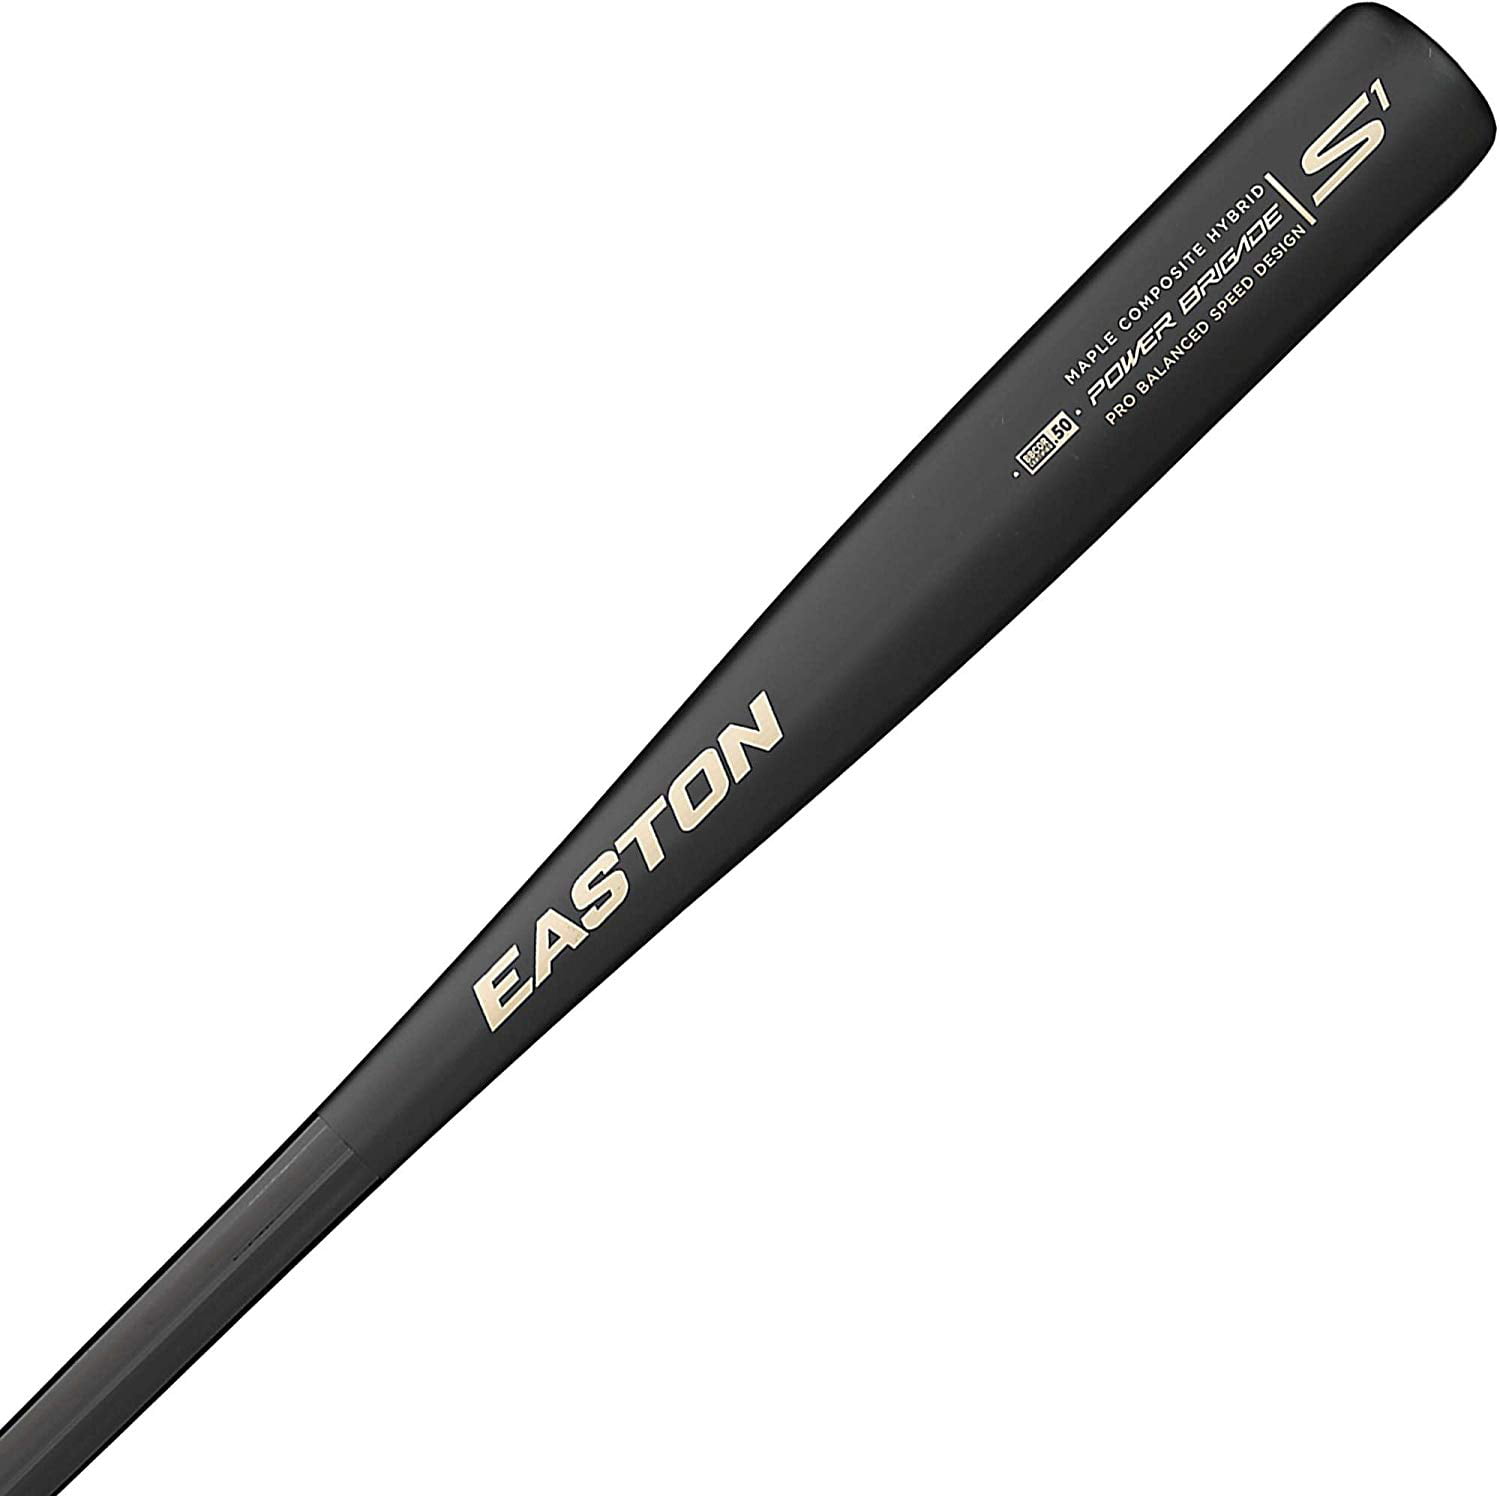 EASTON S1 MAPLE BASEBALL BAT 33 